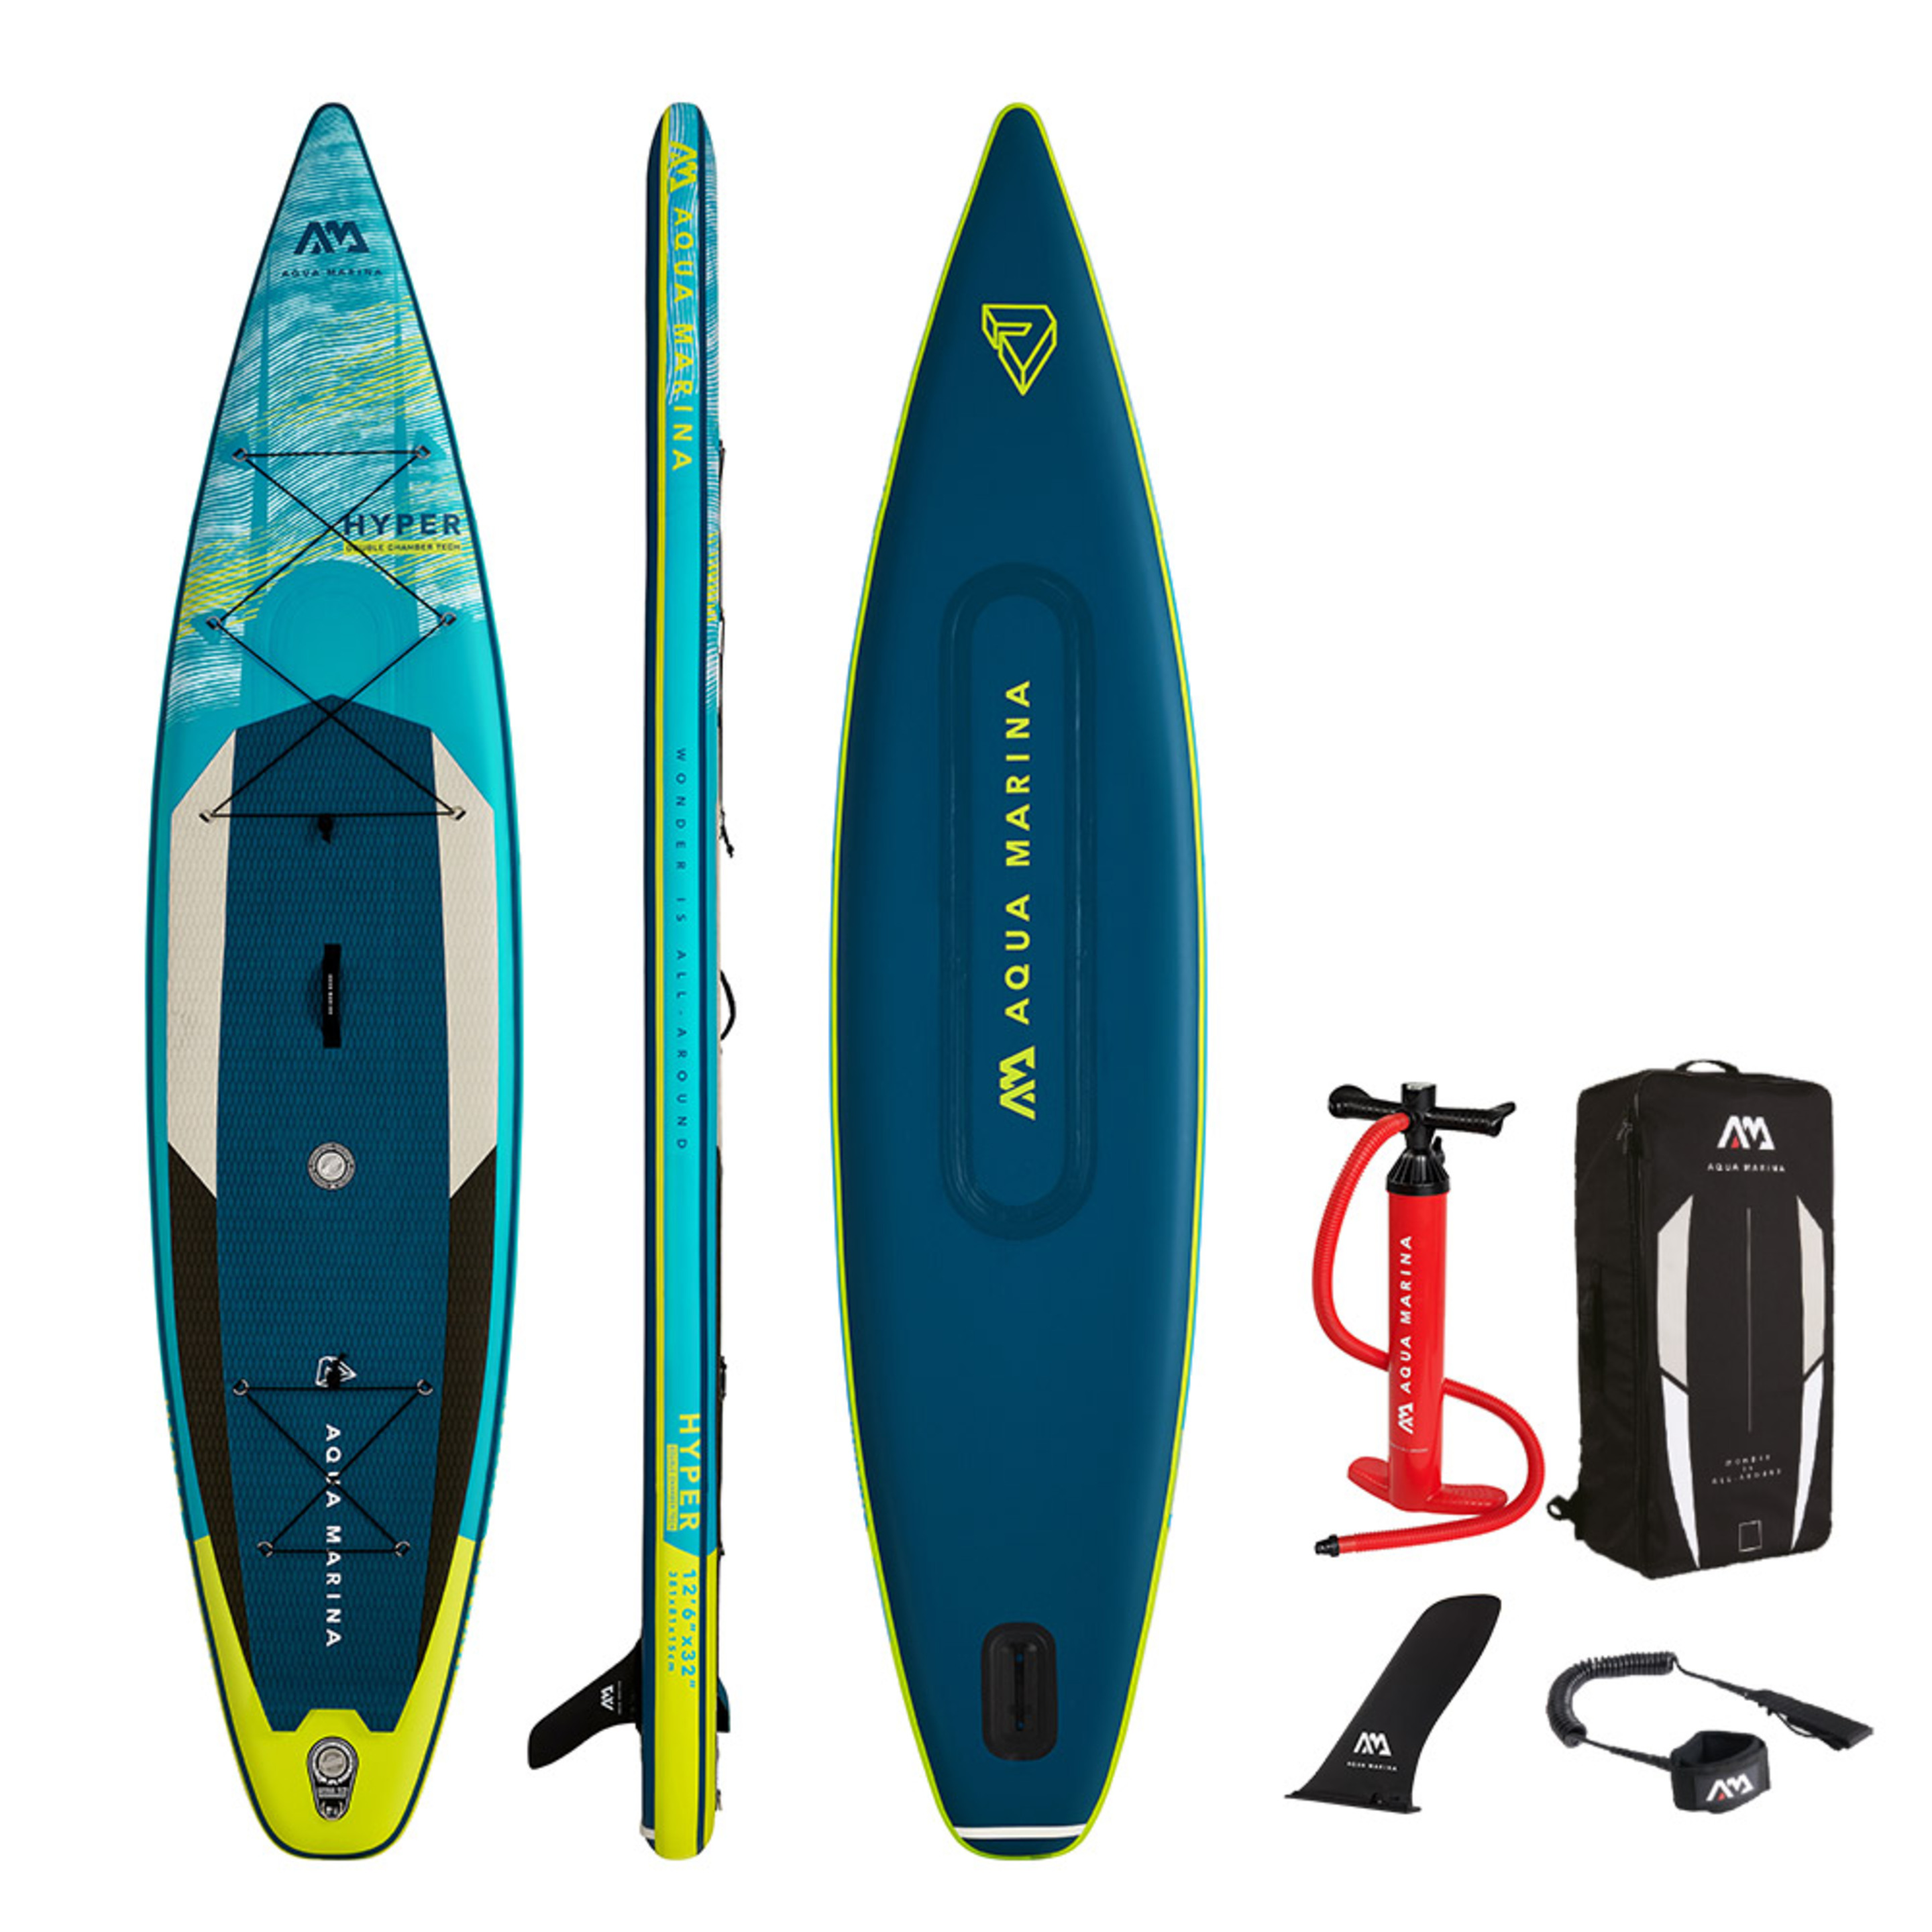 Tabla Paddle Surf Aqua Marina Hyper 12? 6? - amarillo-azul - 